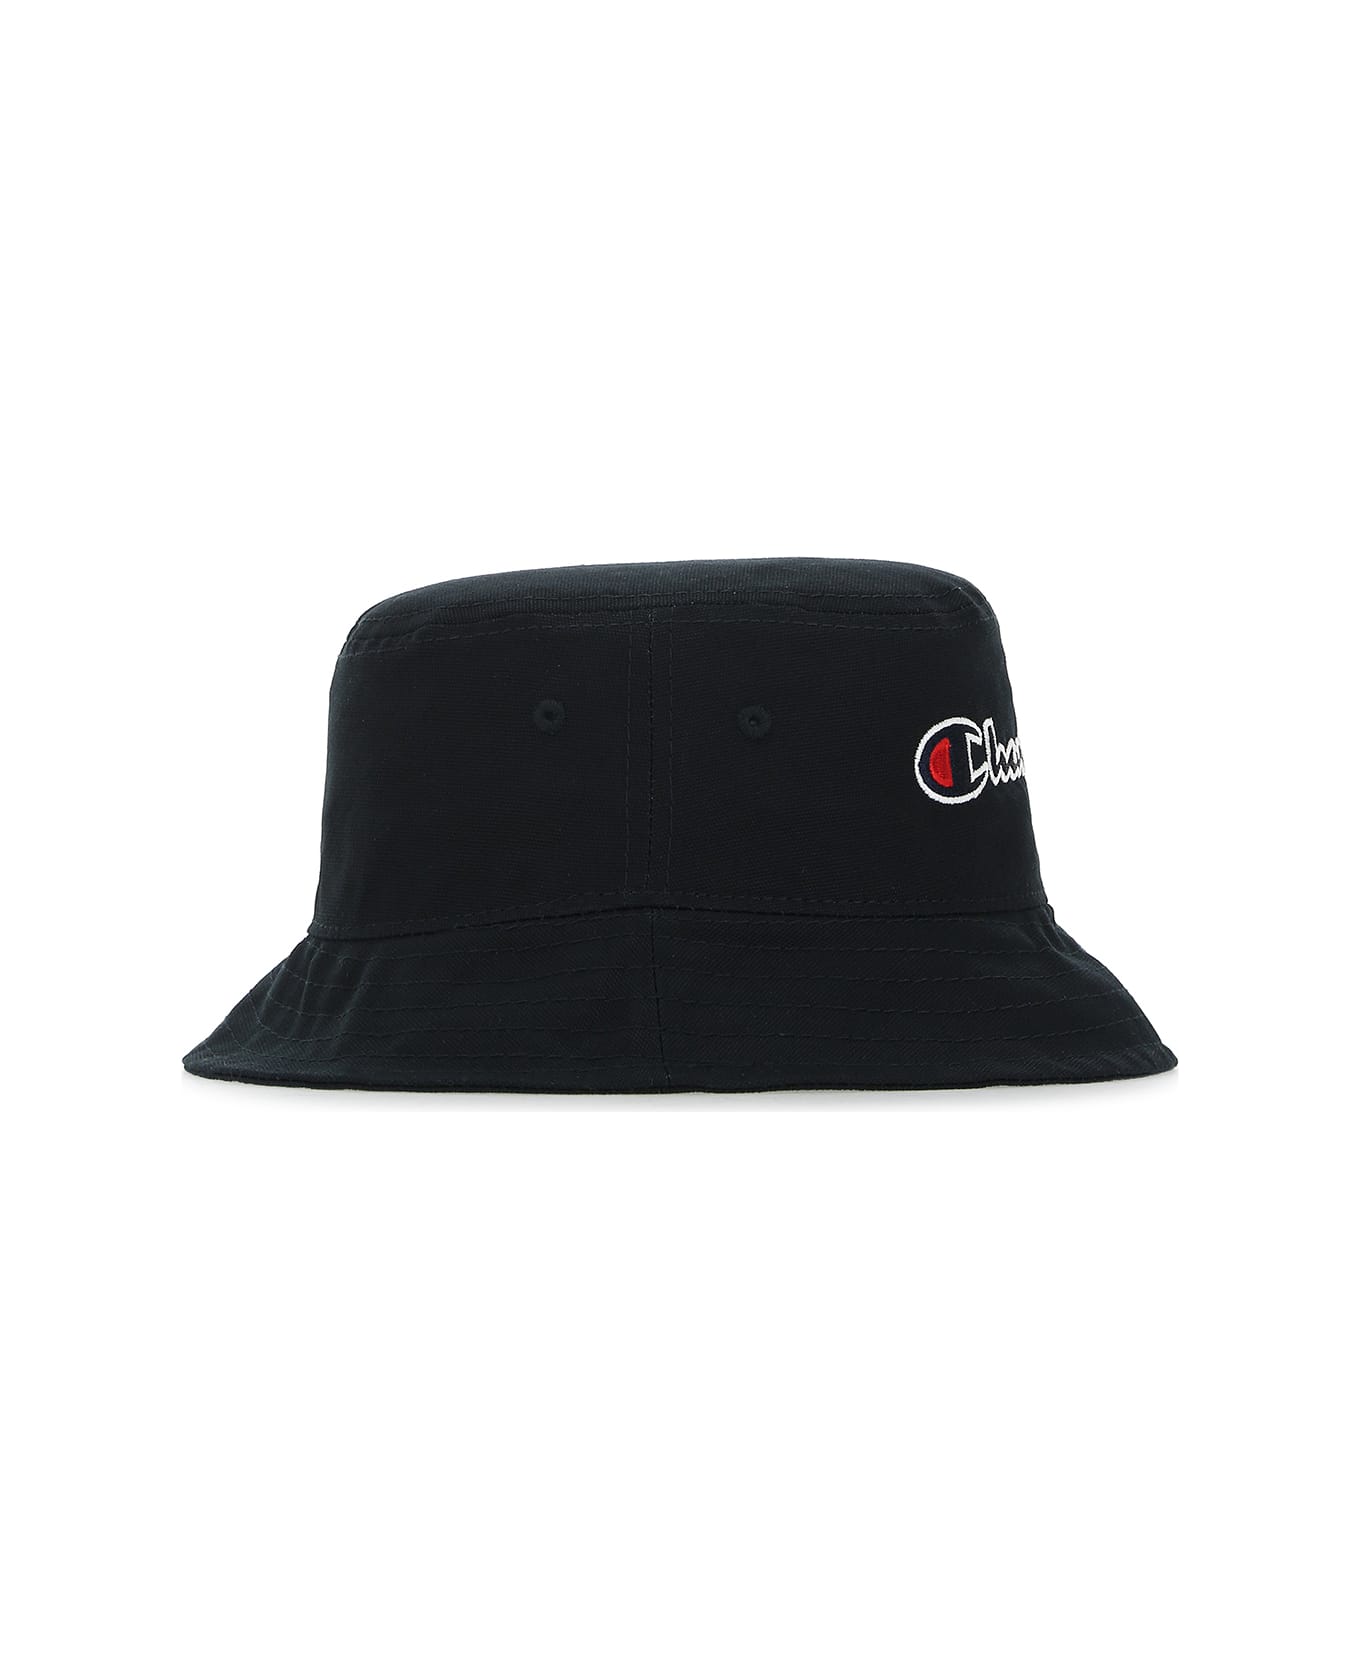 Champion Black Cotton Bucket Hat - KK001 帽子